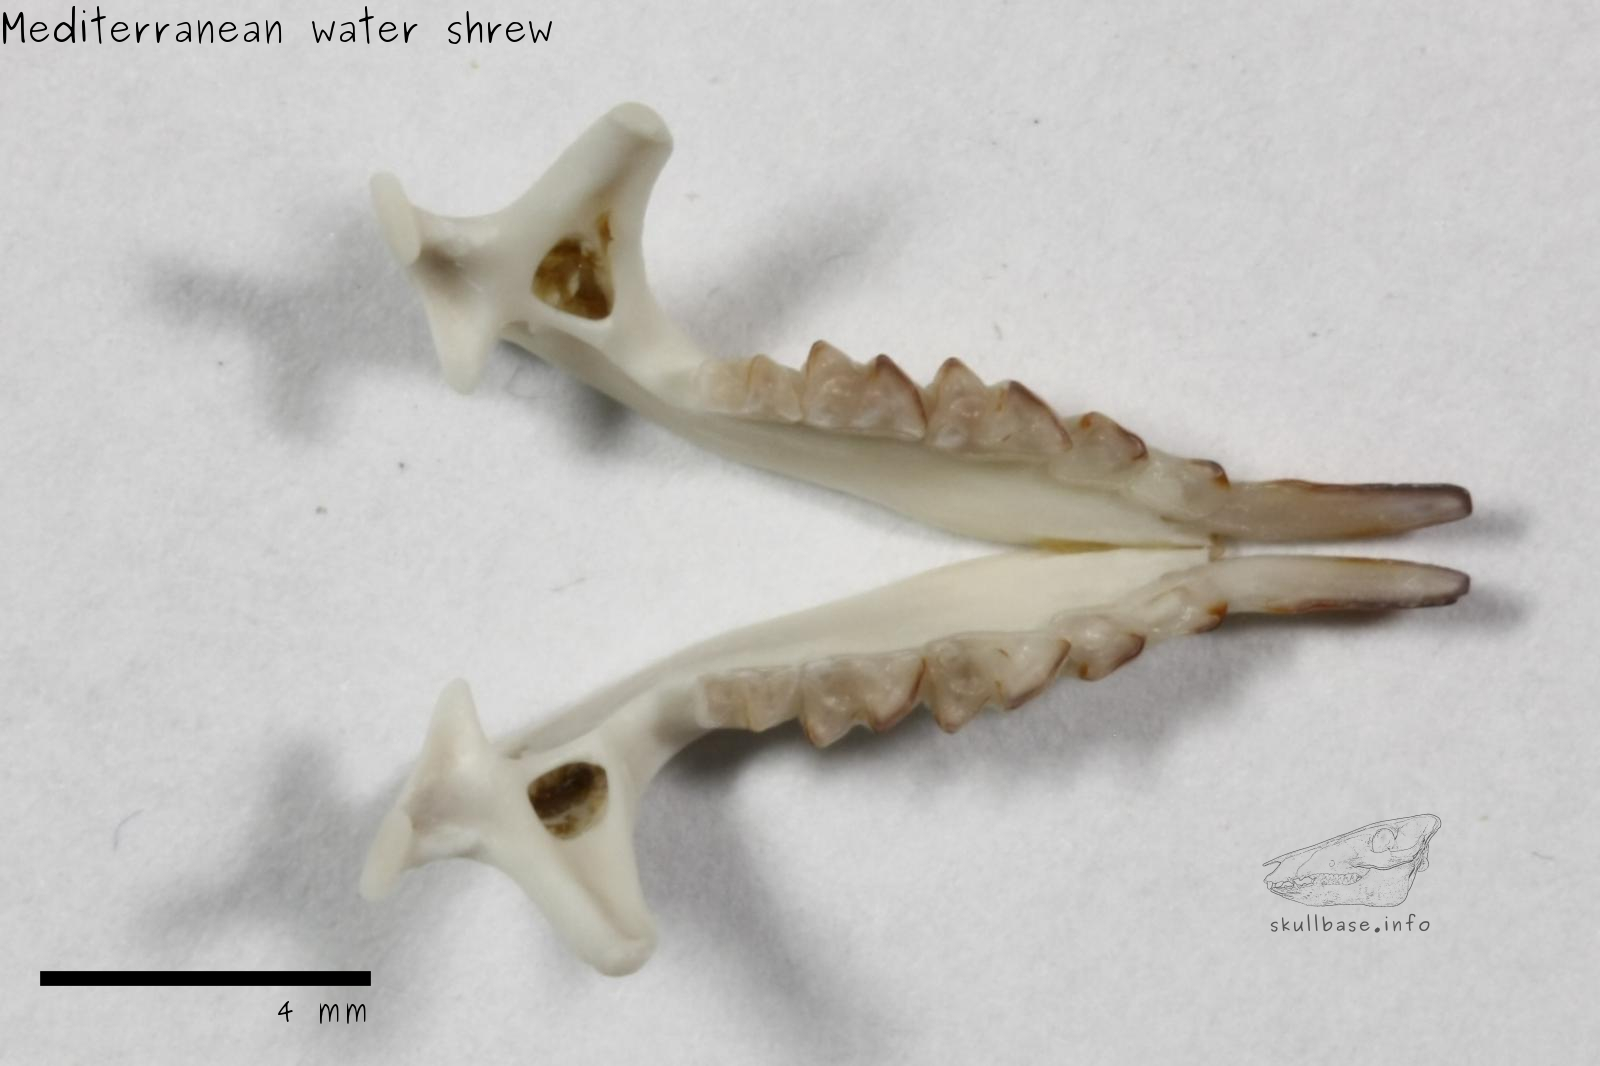 Mediterranean water shrew (Neomys anomalus) jaw